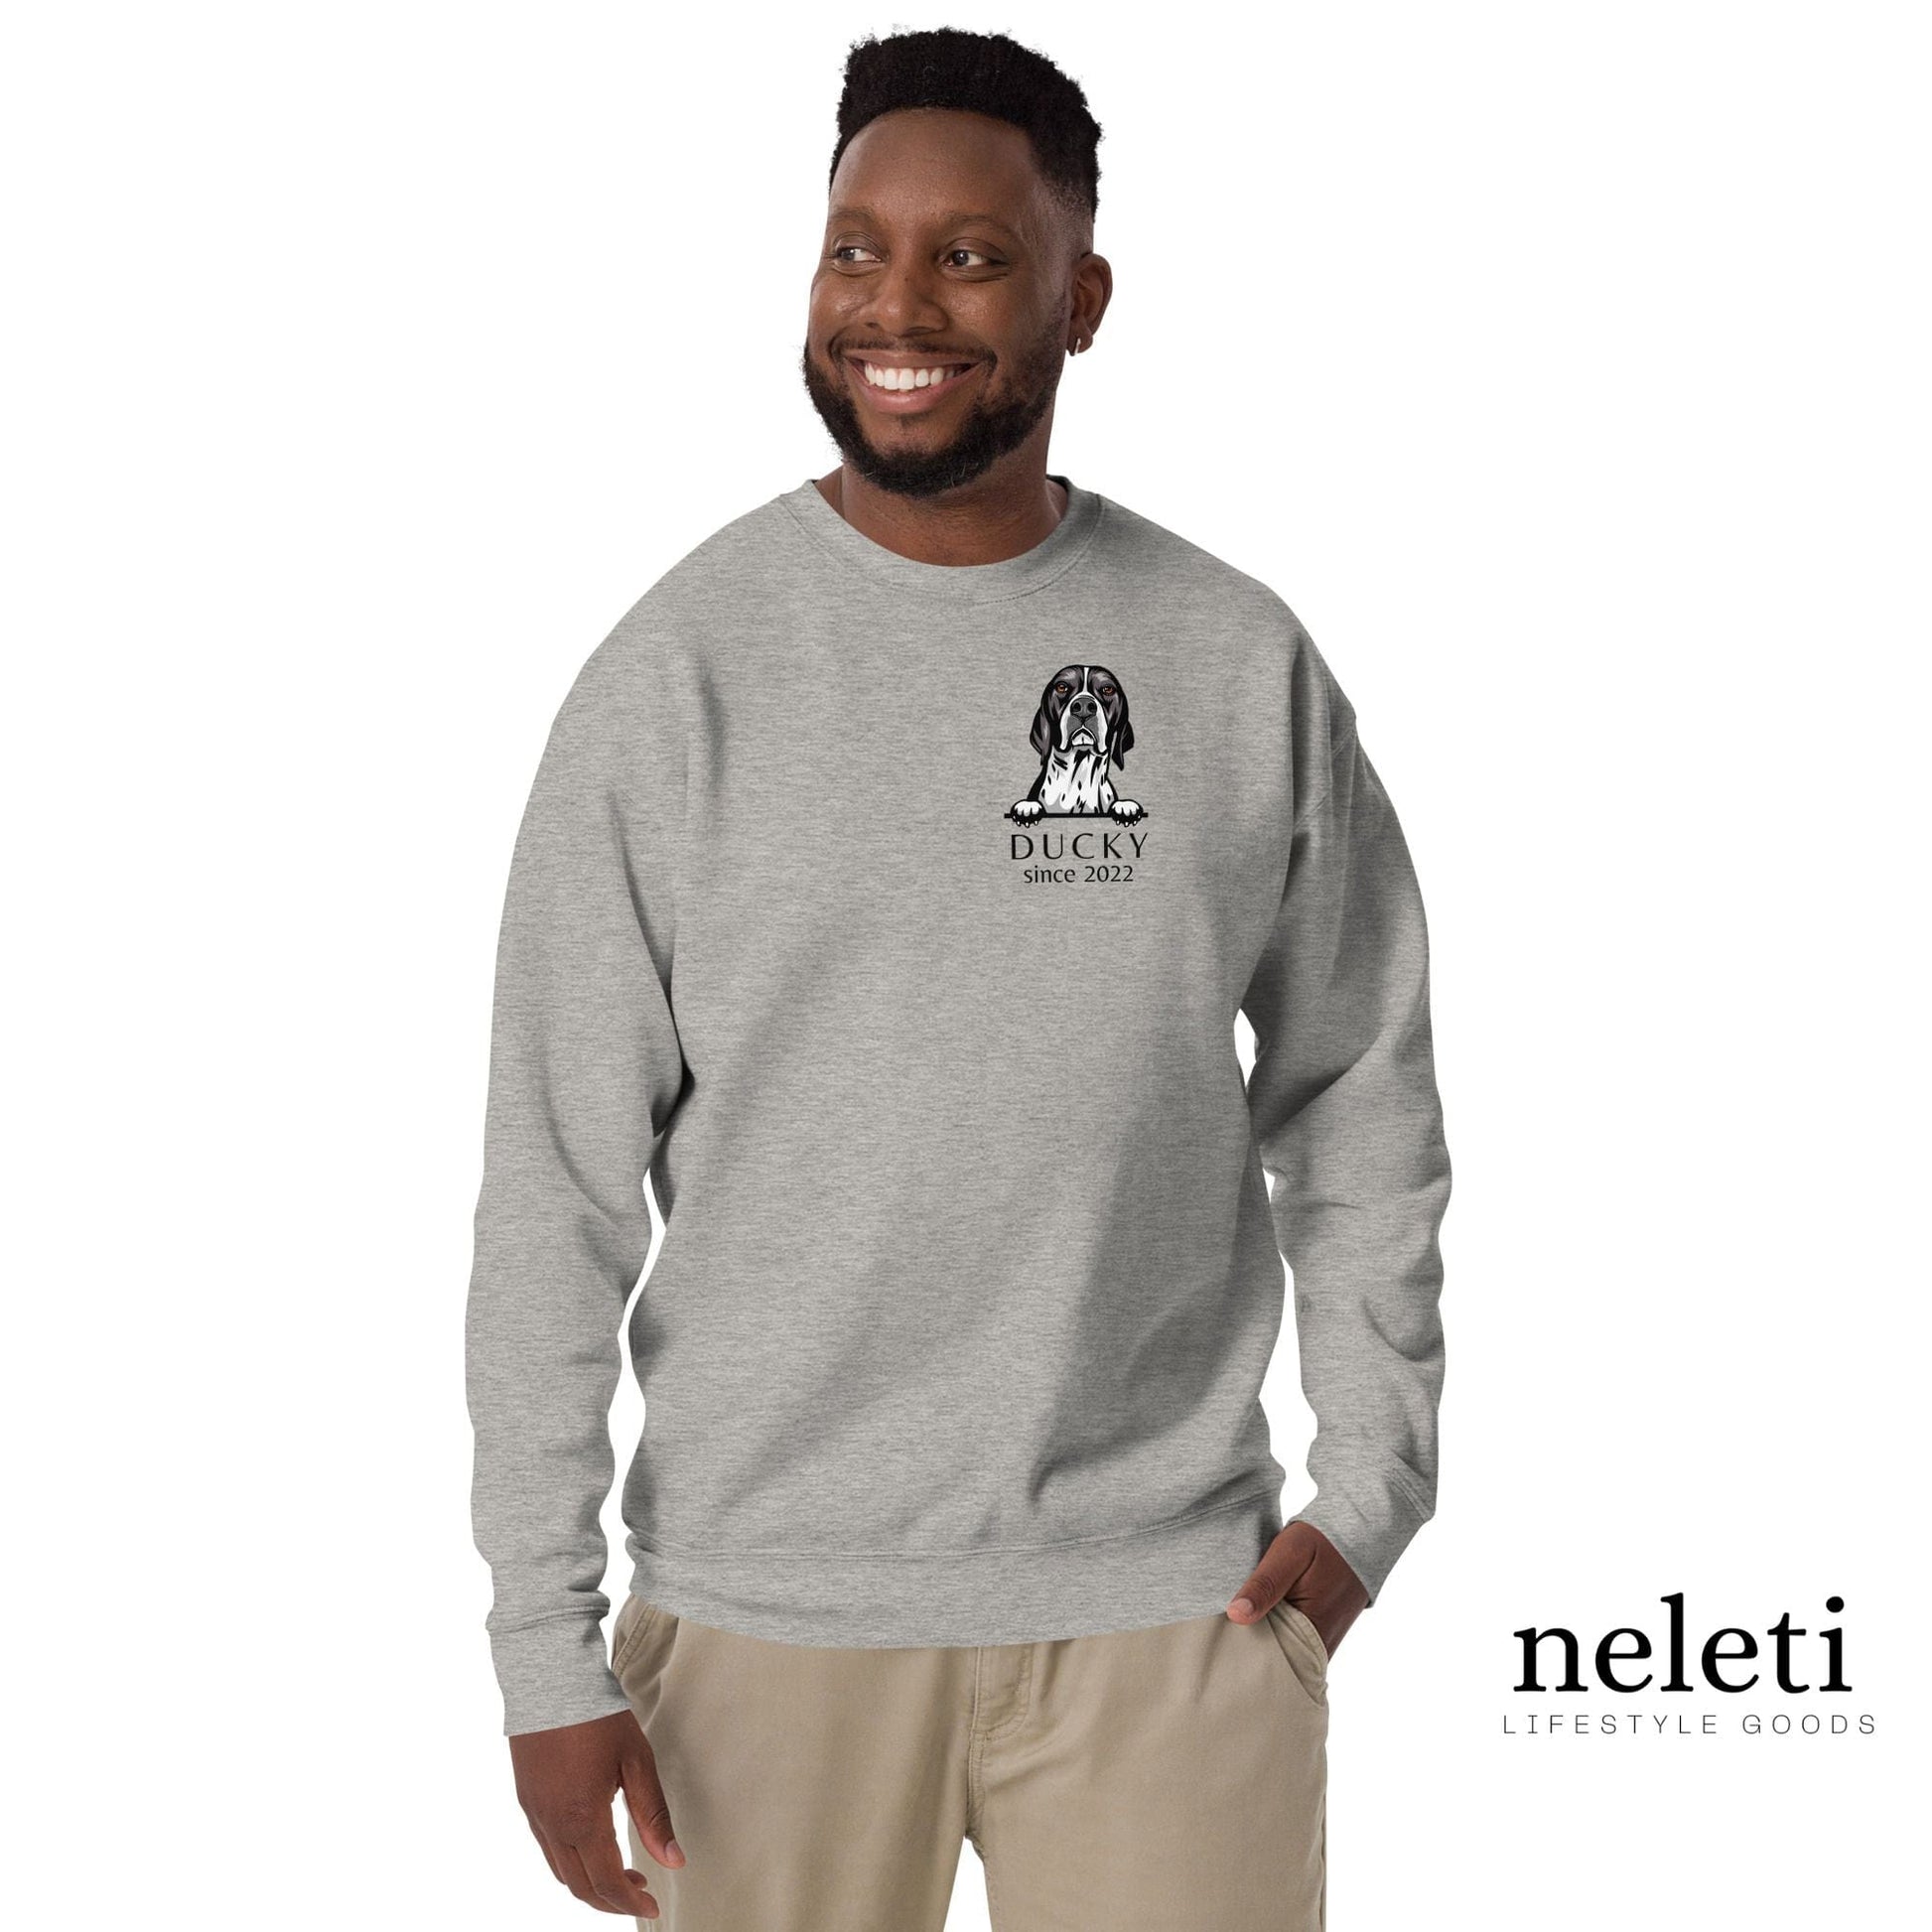 neleti.com-custom-grey-sweater-for-dog-dad